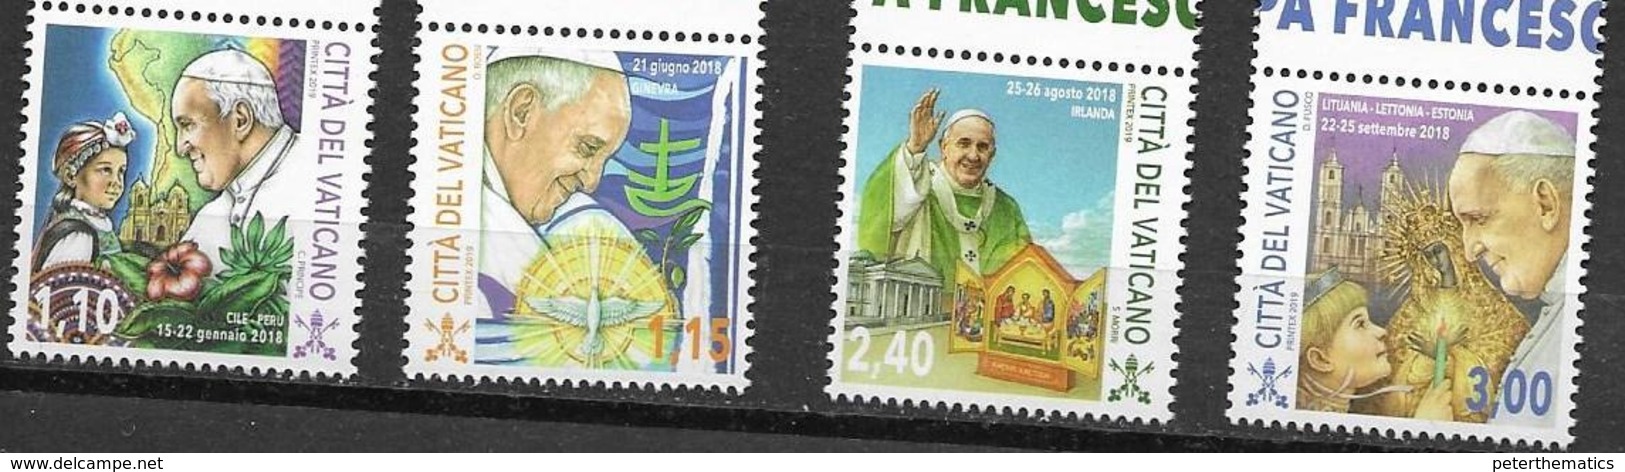 VATICAN, 2019, MNH, CHRISTIANITY, POPE FRANCIS VISITS TO IRELAND, BALTIC STATES, CHILE, PERU, GENEVA, POPES, 4v - Päpste